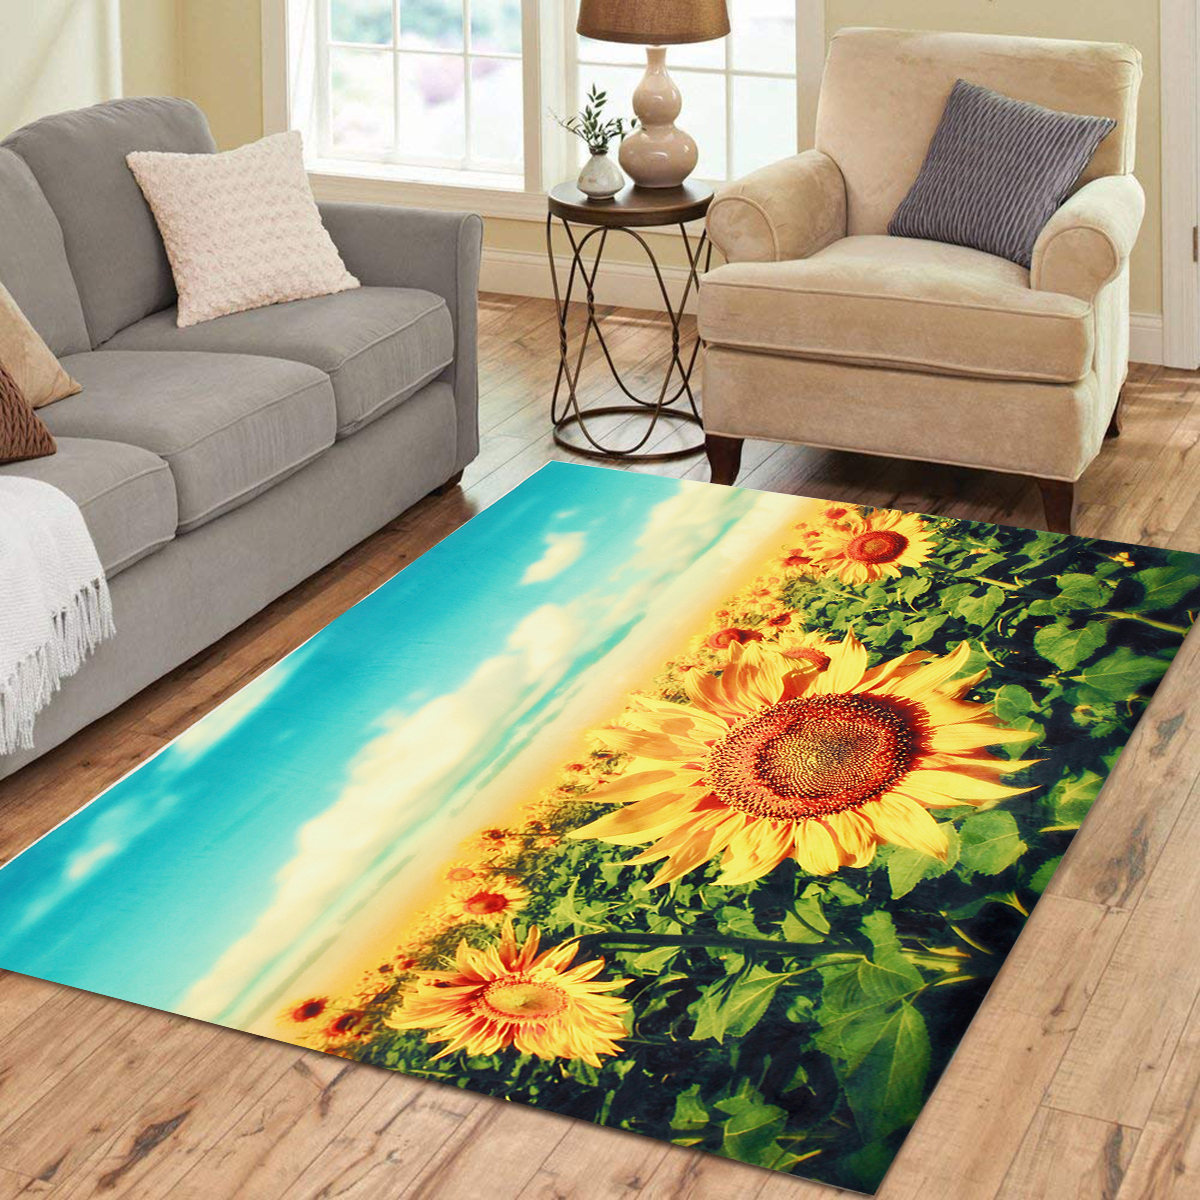 Gold-Sunflower-Area-Floor-Rug-Carpet-For-Bedroom-Living-Room-Home-Decoration-1404118-8